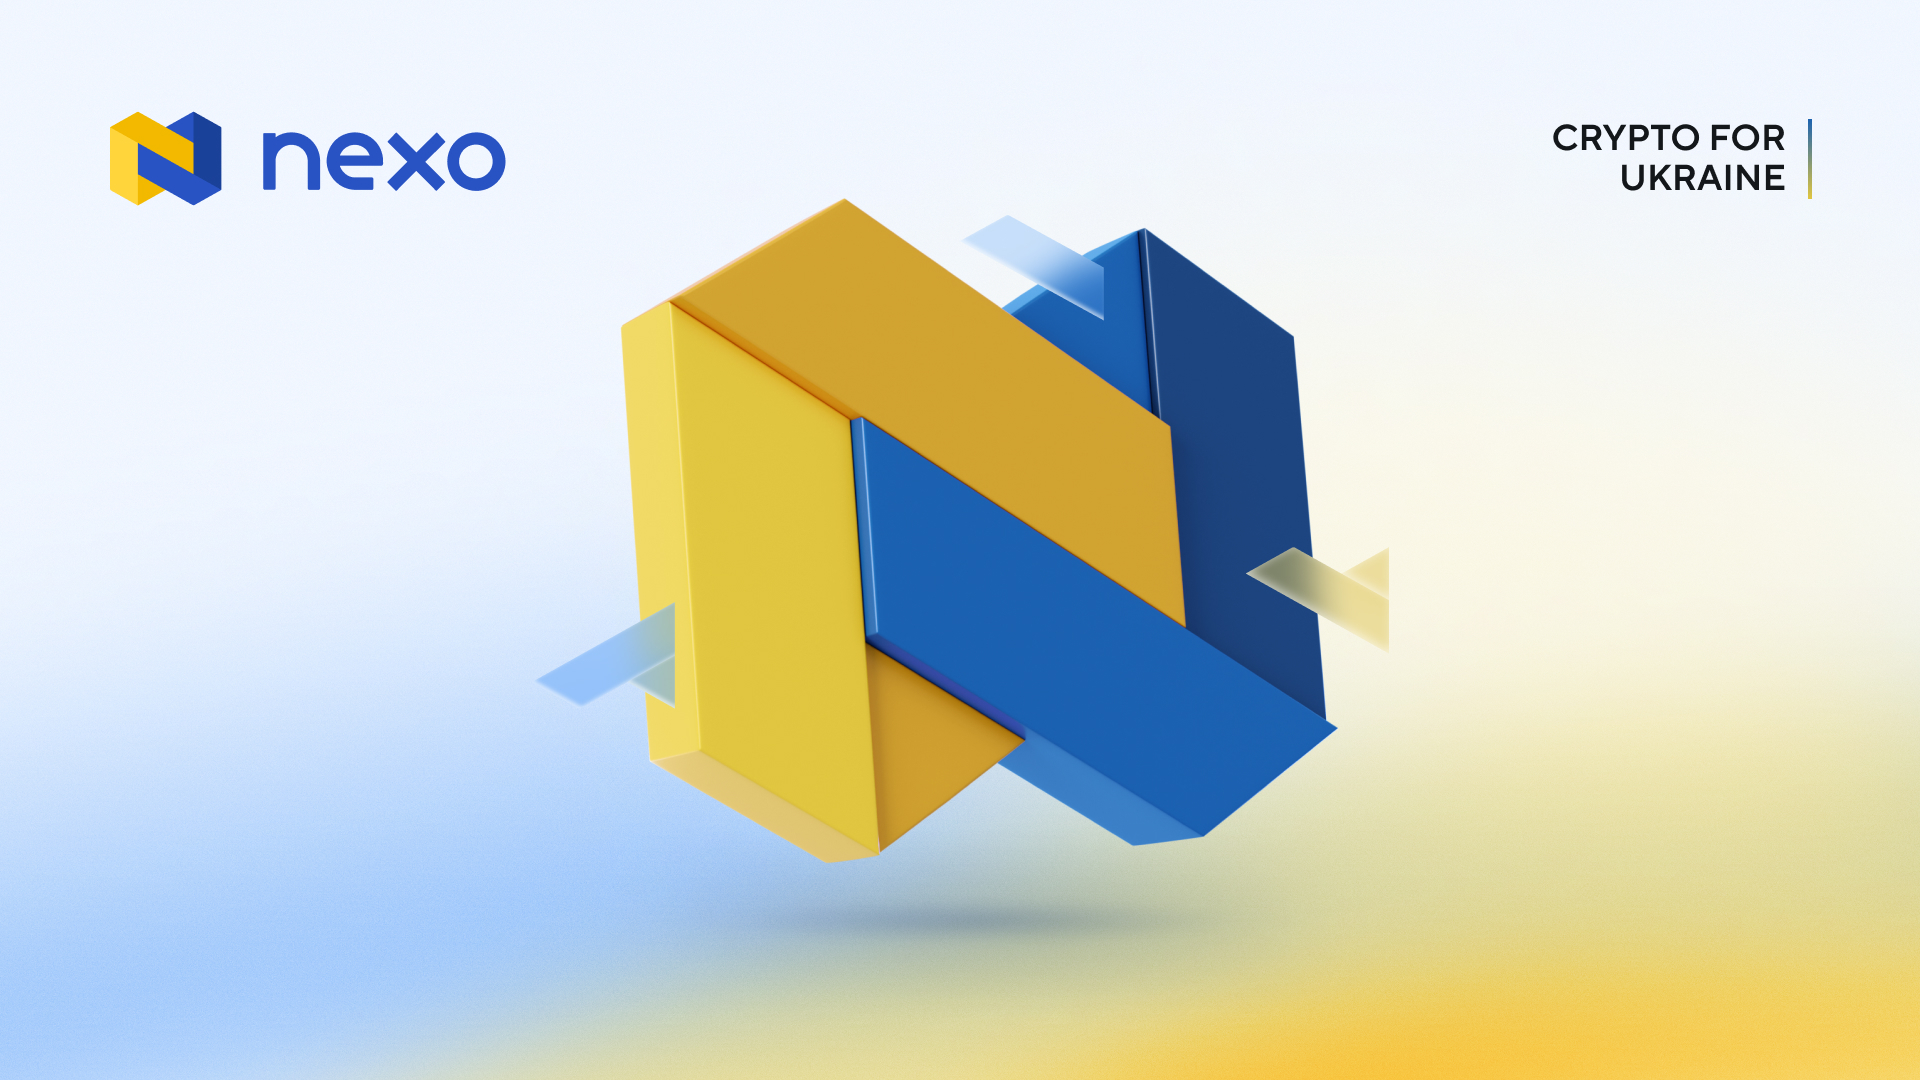 Nexo's Campaign to Support Ukraine